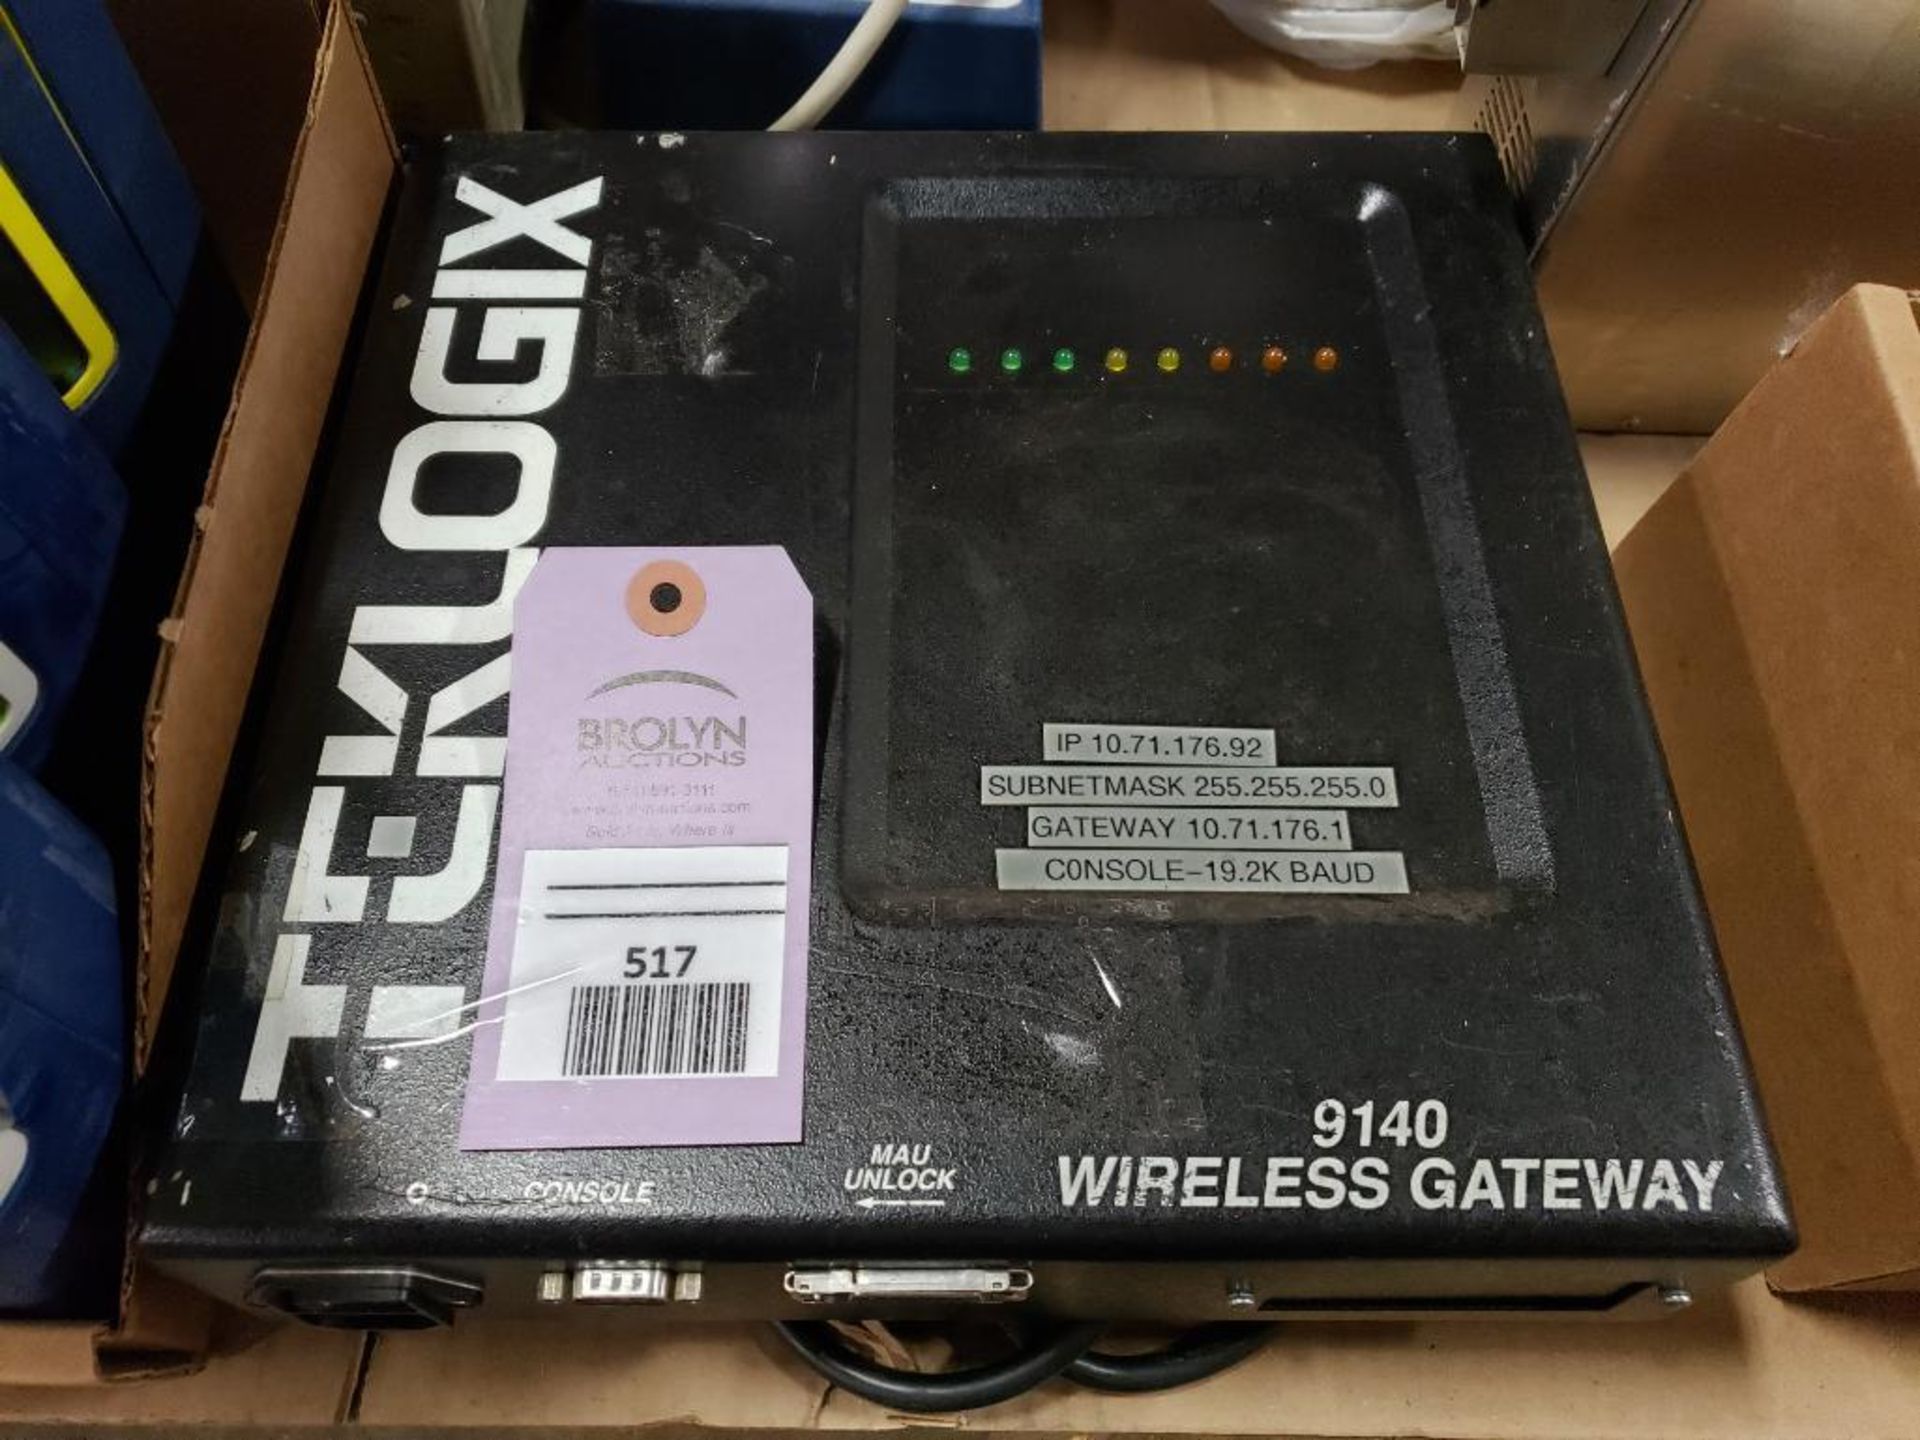 Teklogix 9140 wireless gateway.